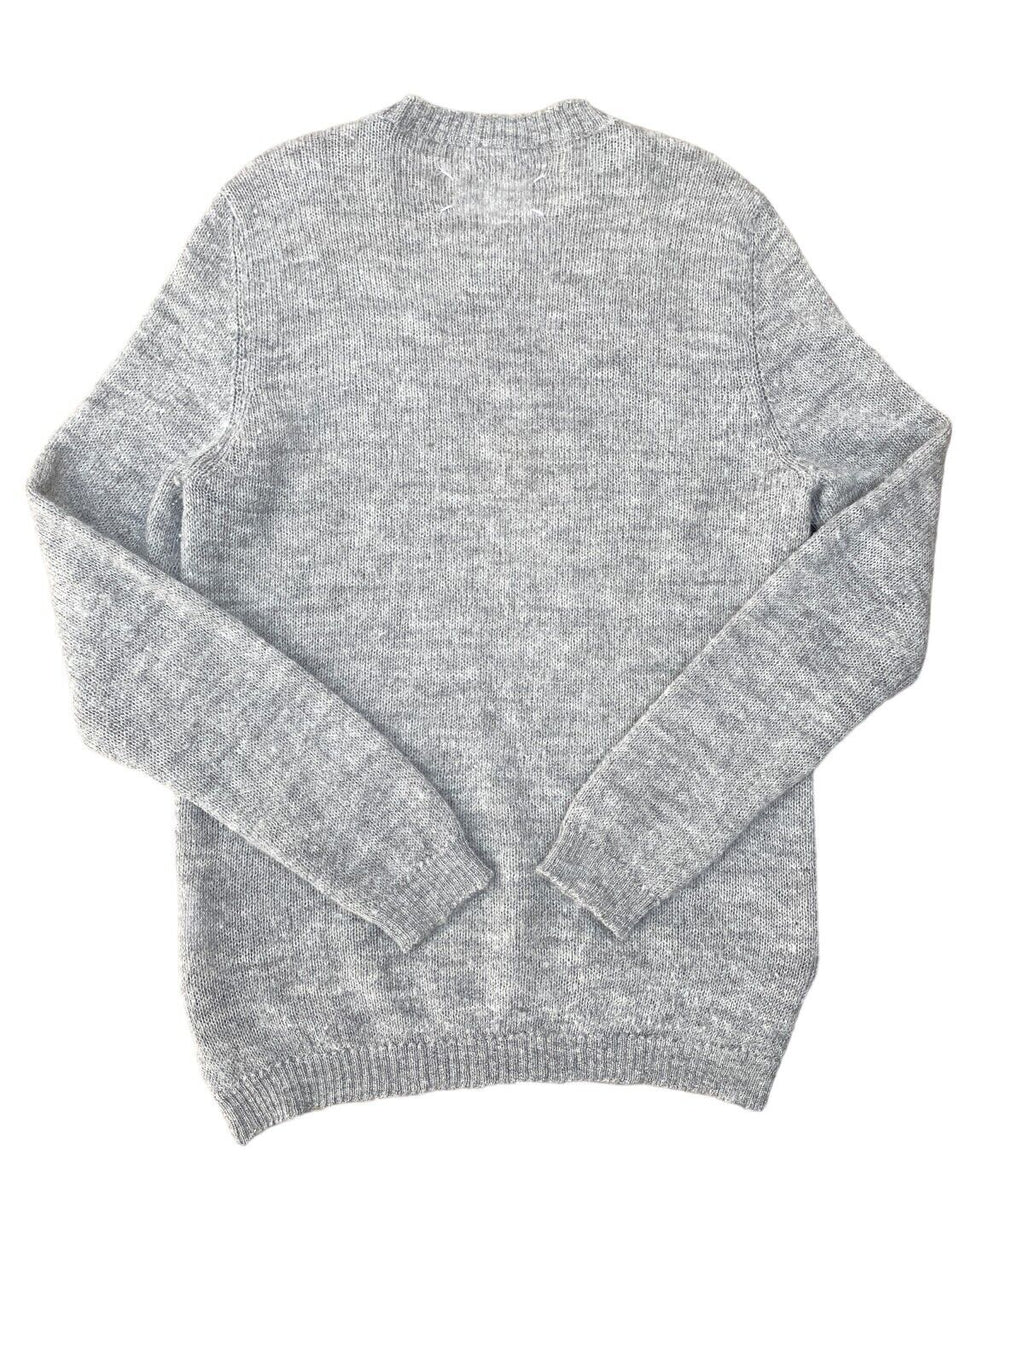 FW 2013 Grey Alpaca Sweater